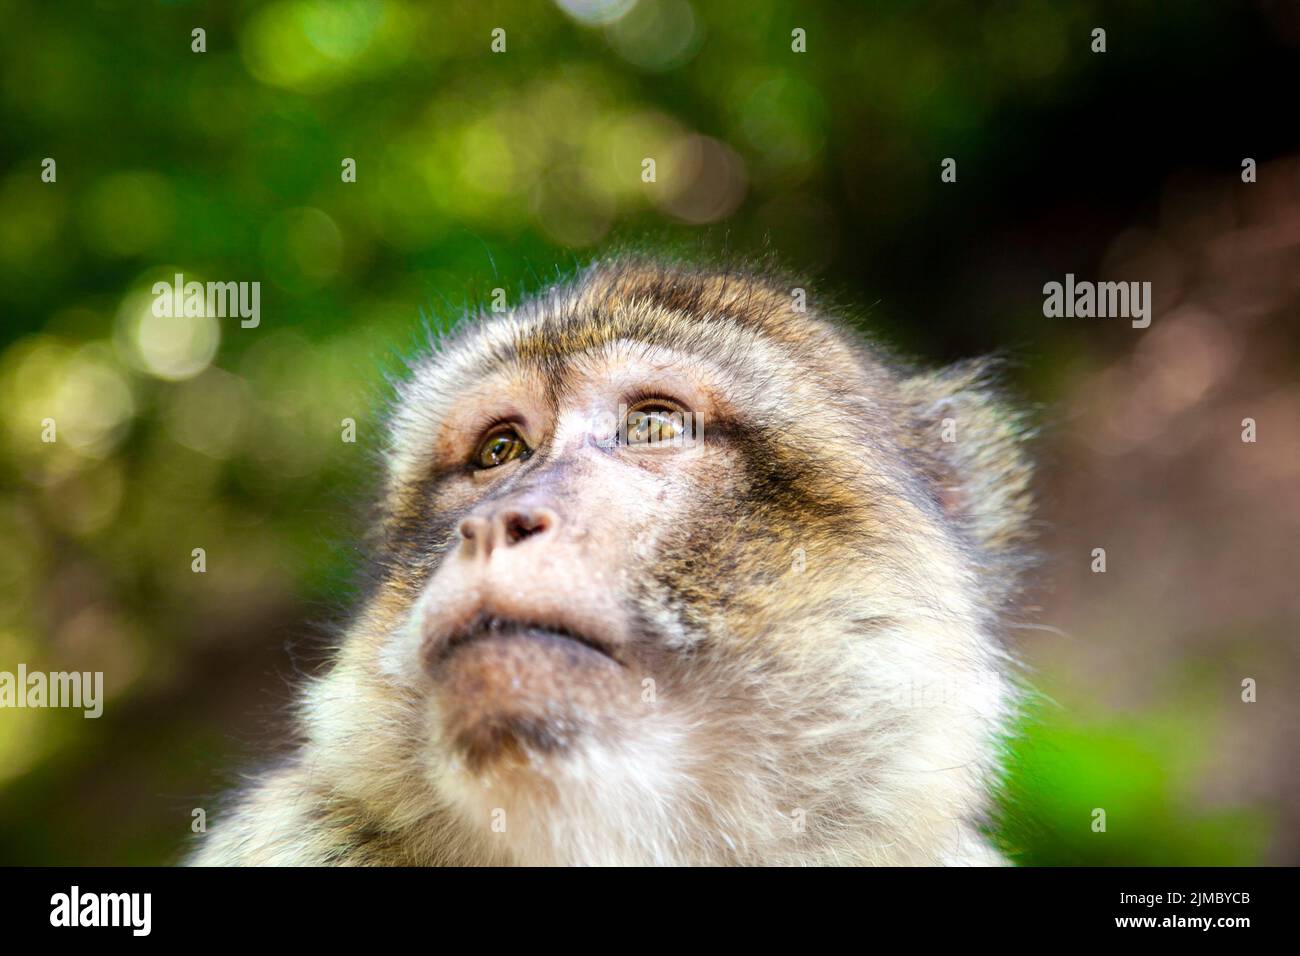 Gros plan d'un singe macaque barbaire (macaque barbaire) à Trentham Monkey Forest, Stoke-on-Trent, Staffordshire, Royaume-Uni Banque D'Images